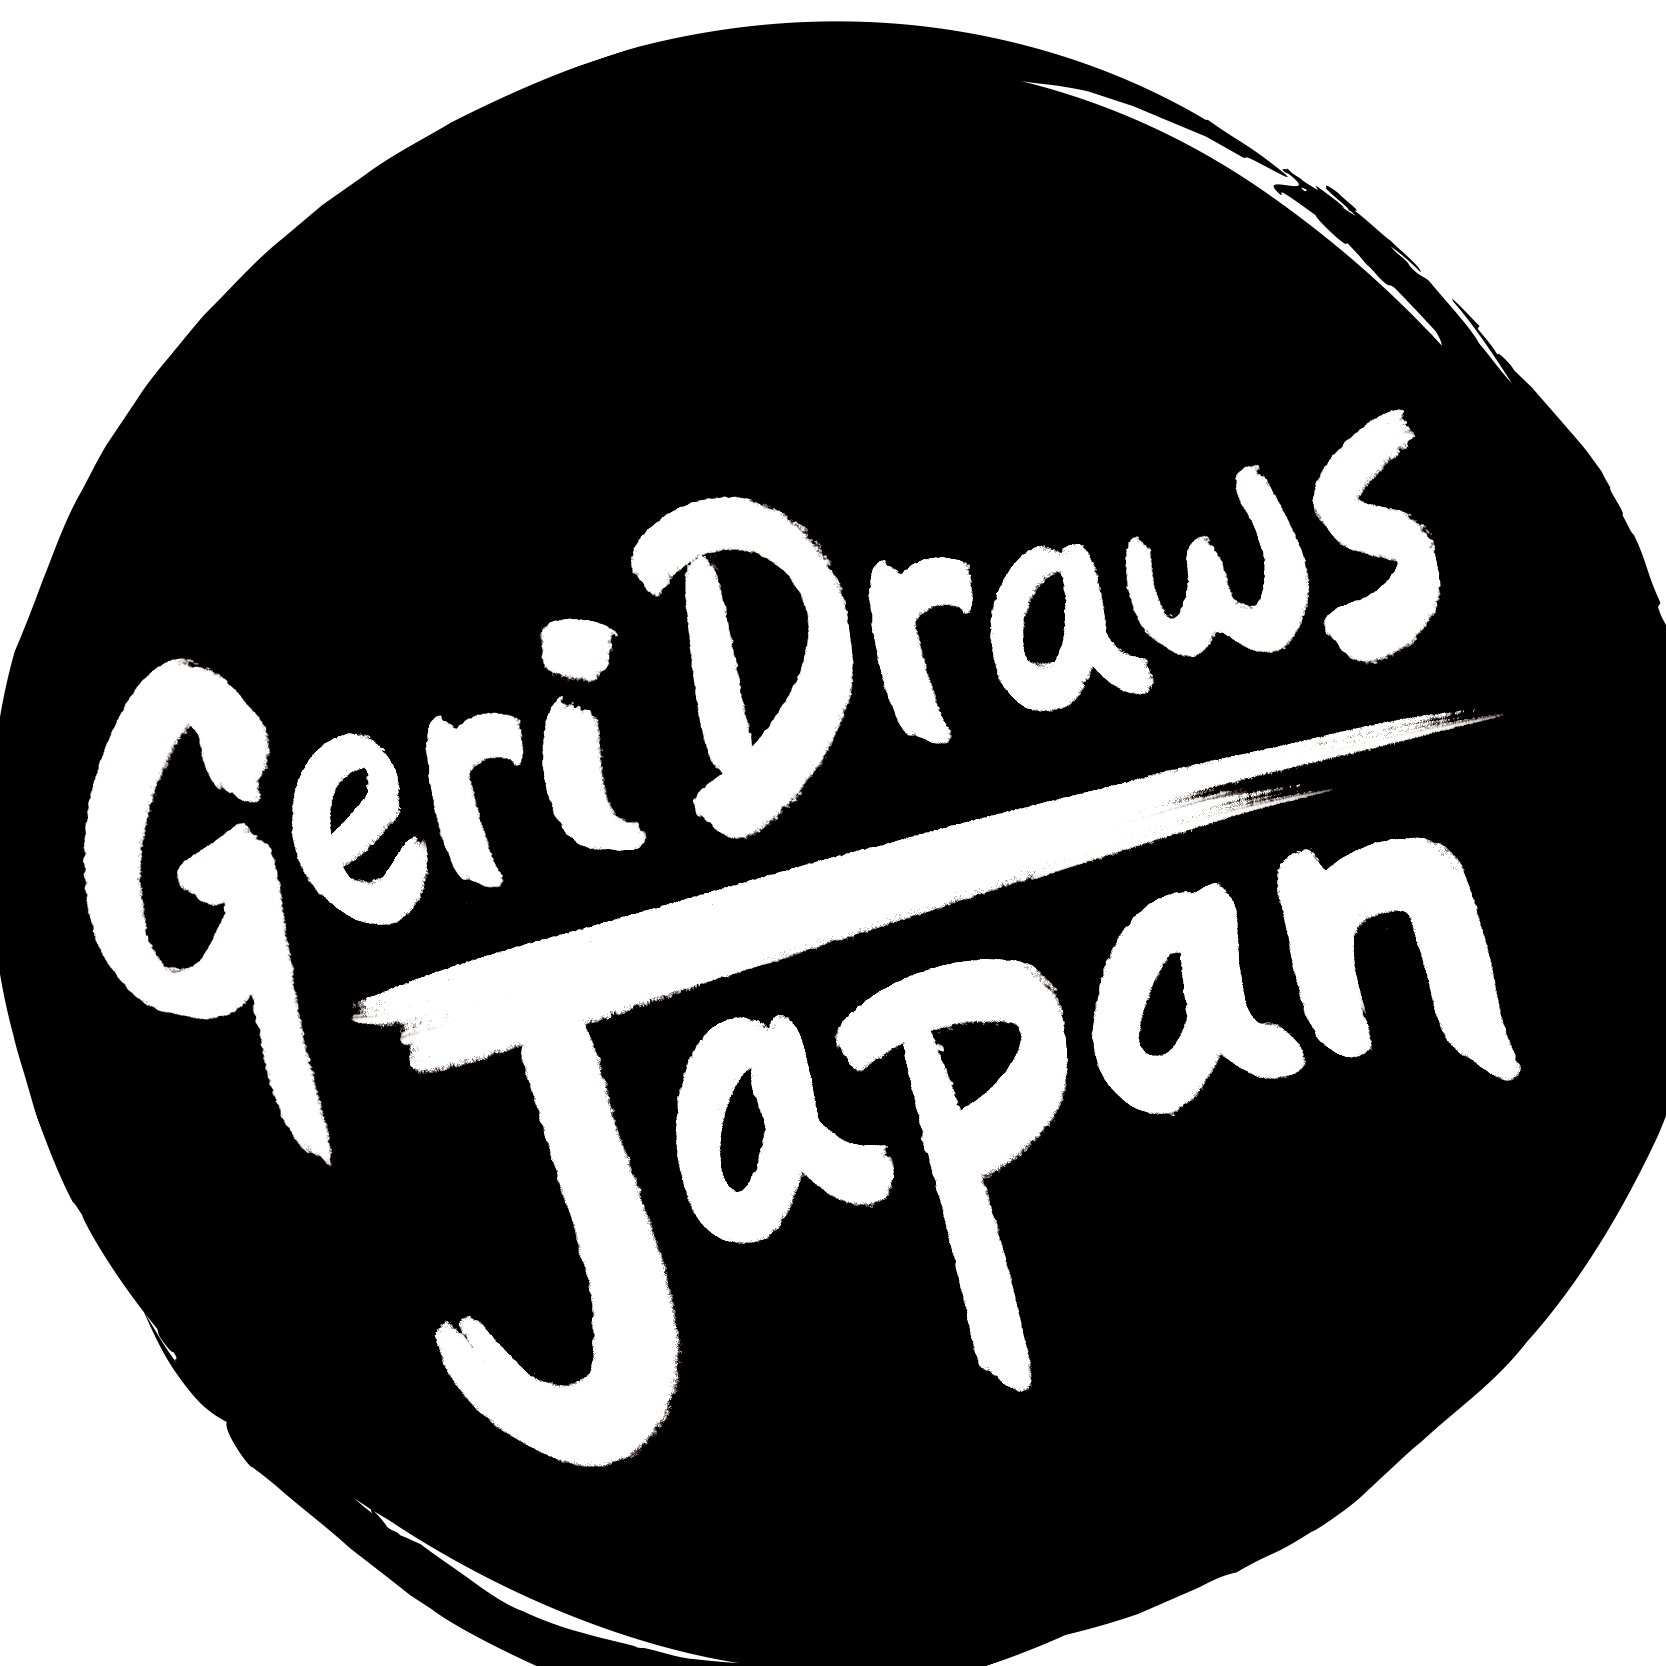 Canadian illustrator, living in Nottingham, UK and drawing Japan. Shop online at https://t.co/qQWfwoZQxV ★ カナダ人イラストレータ＆デサイナーです。色々な日本文化の事を描いています。お好み焼きが大好き！